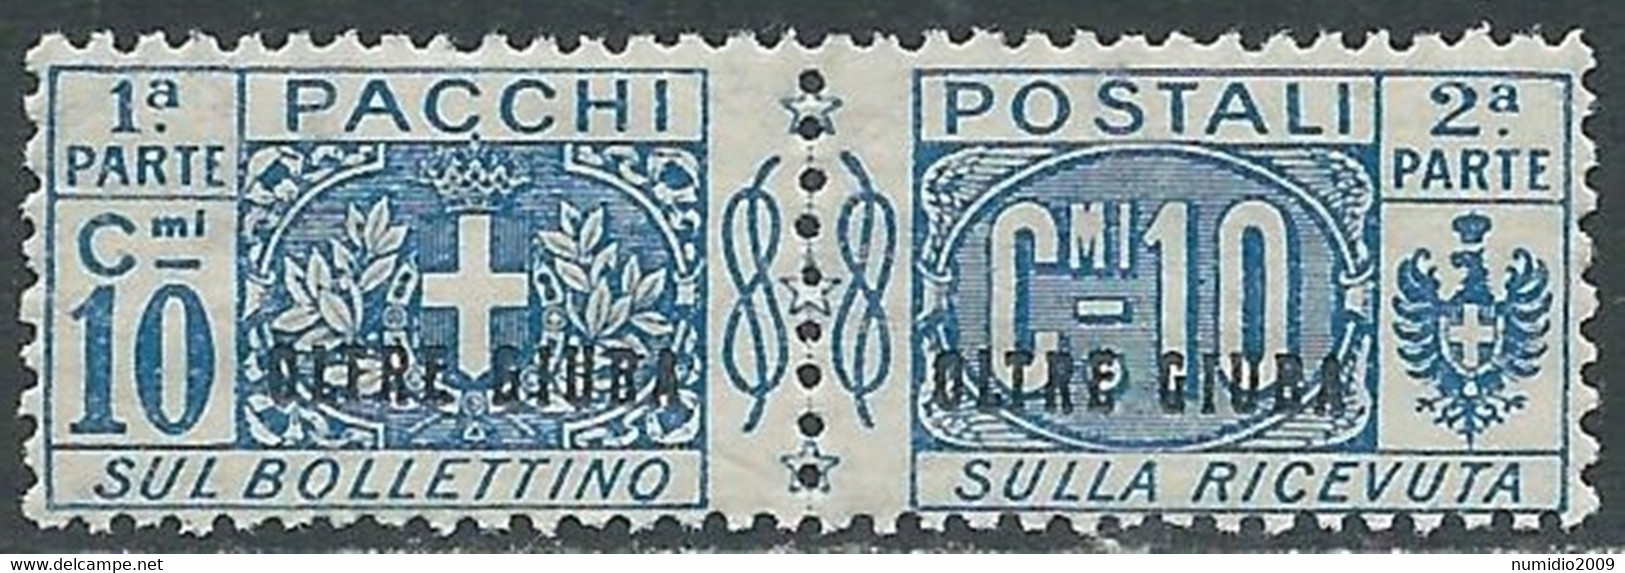 1925 OLTRE GIUBA PACCHI POSTALI 10 CENT MNH ** - RF46-2 - Oltre Giuba